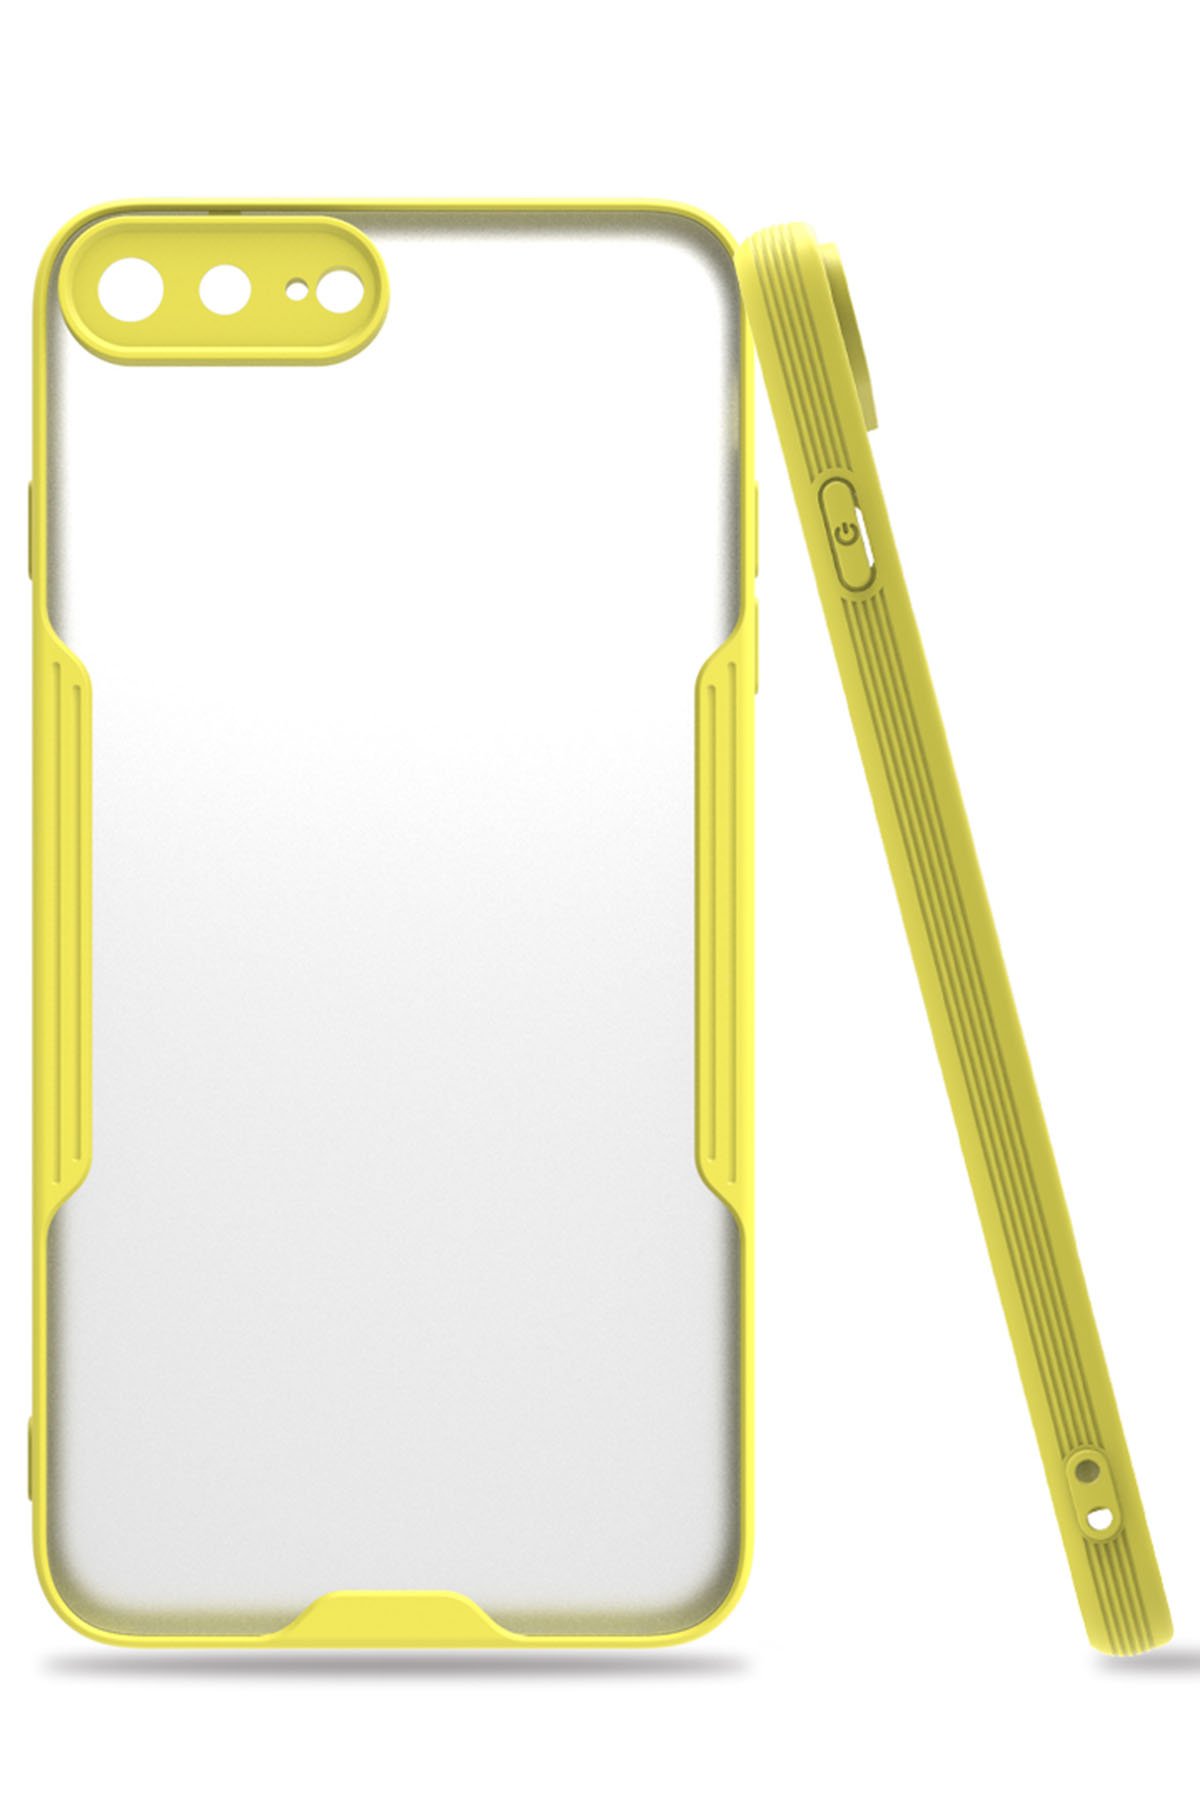 Newface iPhone 7 Plus Kılıf First Silikon - Gold